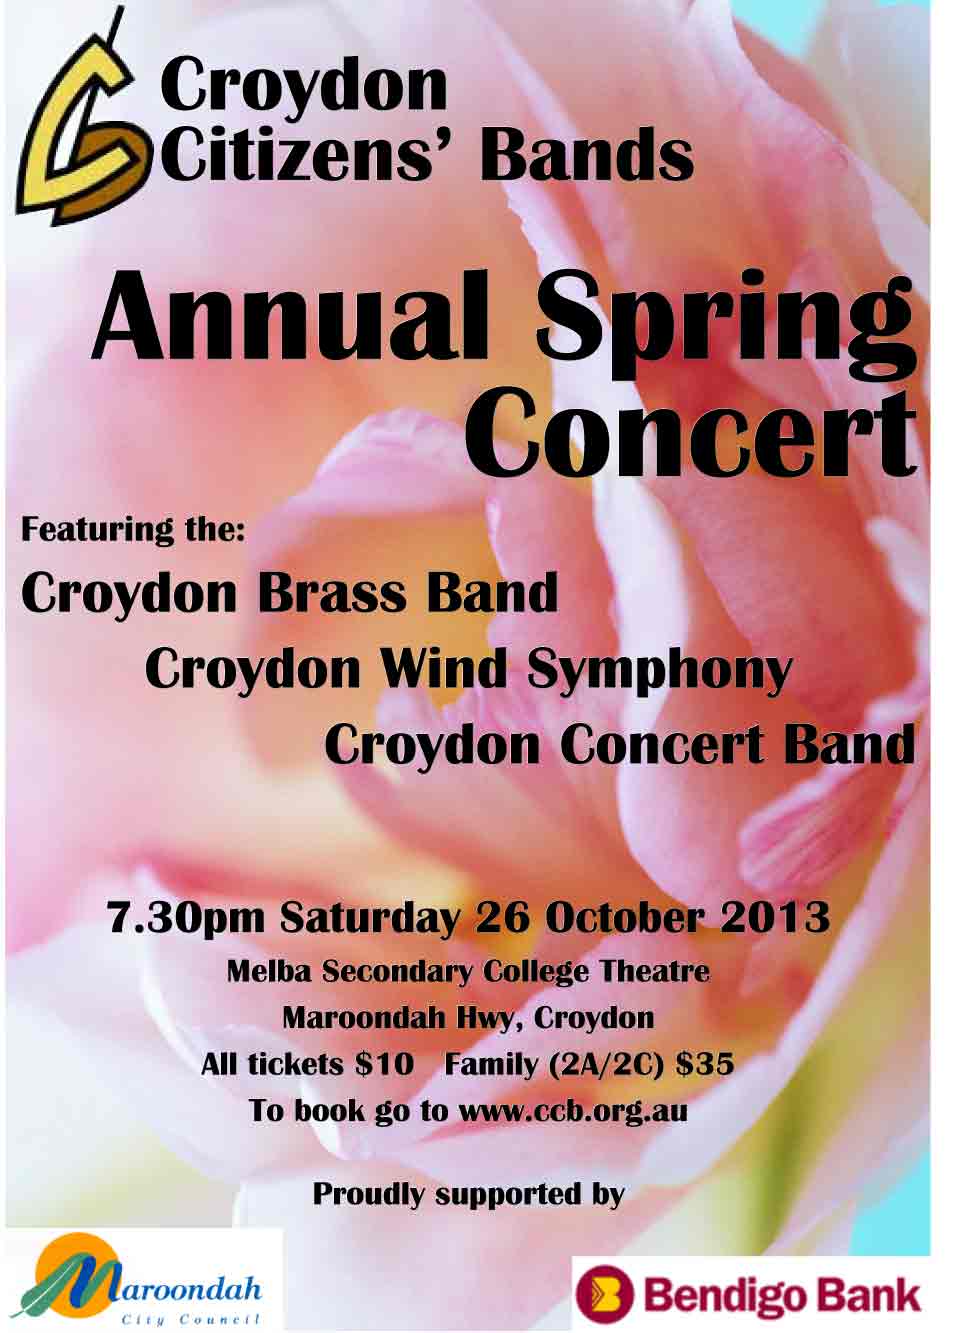 Croydon Citizens' Bands Concert Flyer 26 Oct 2013